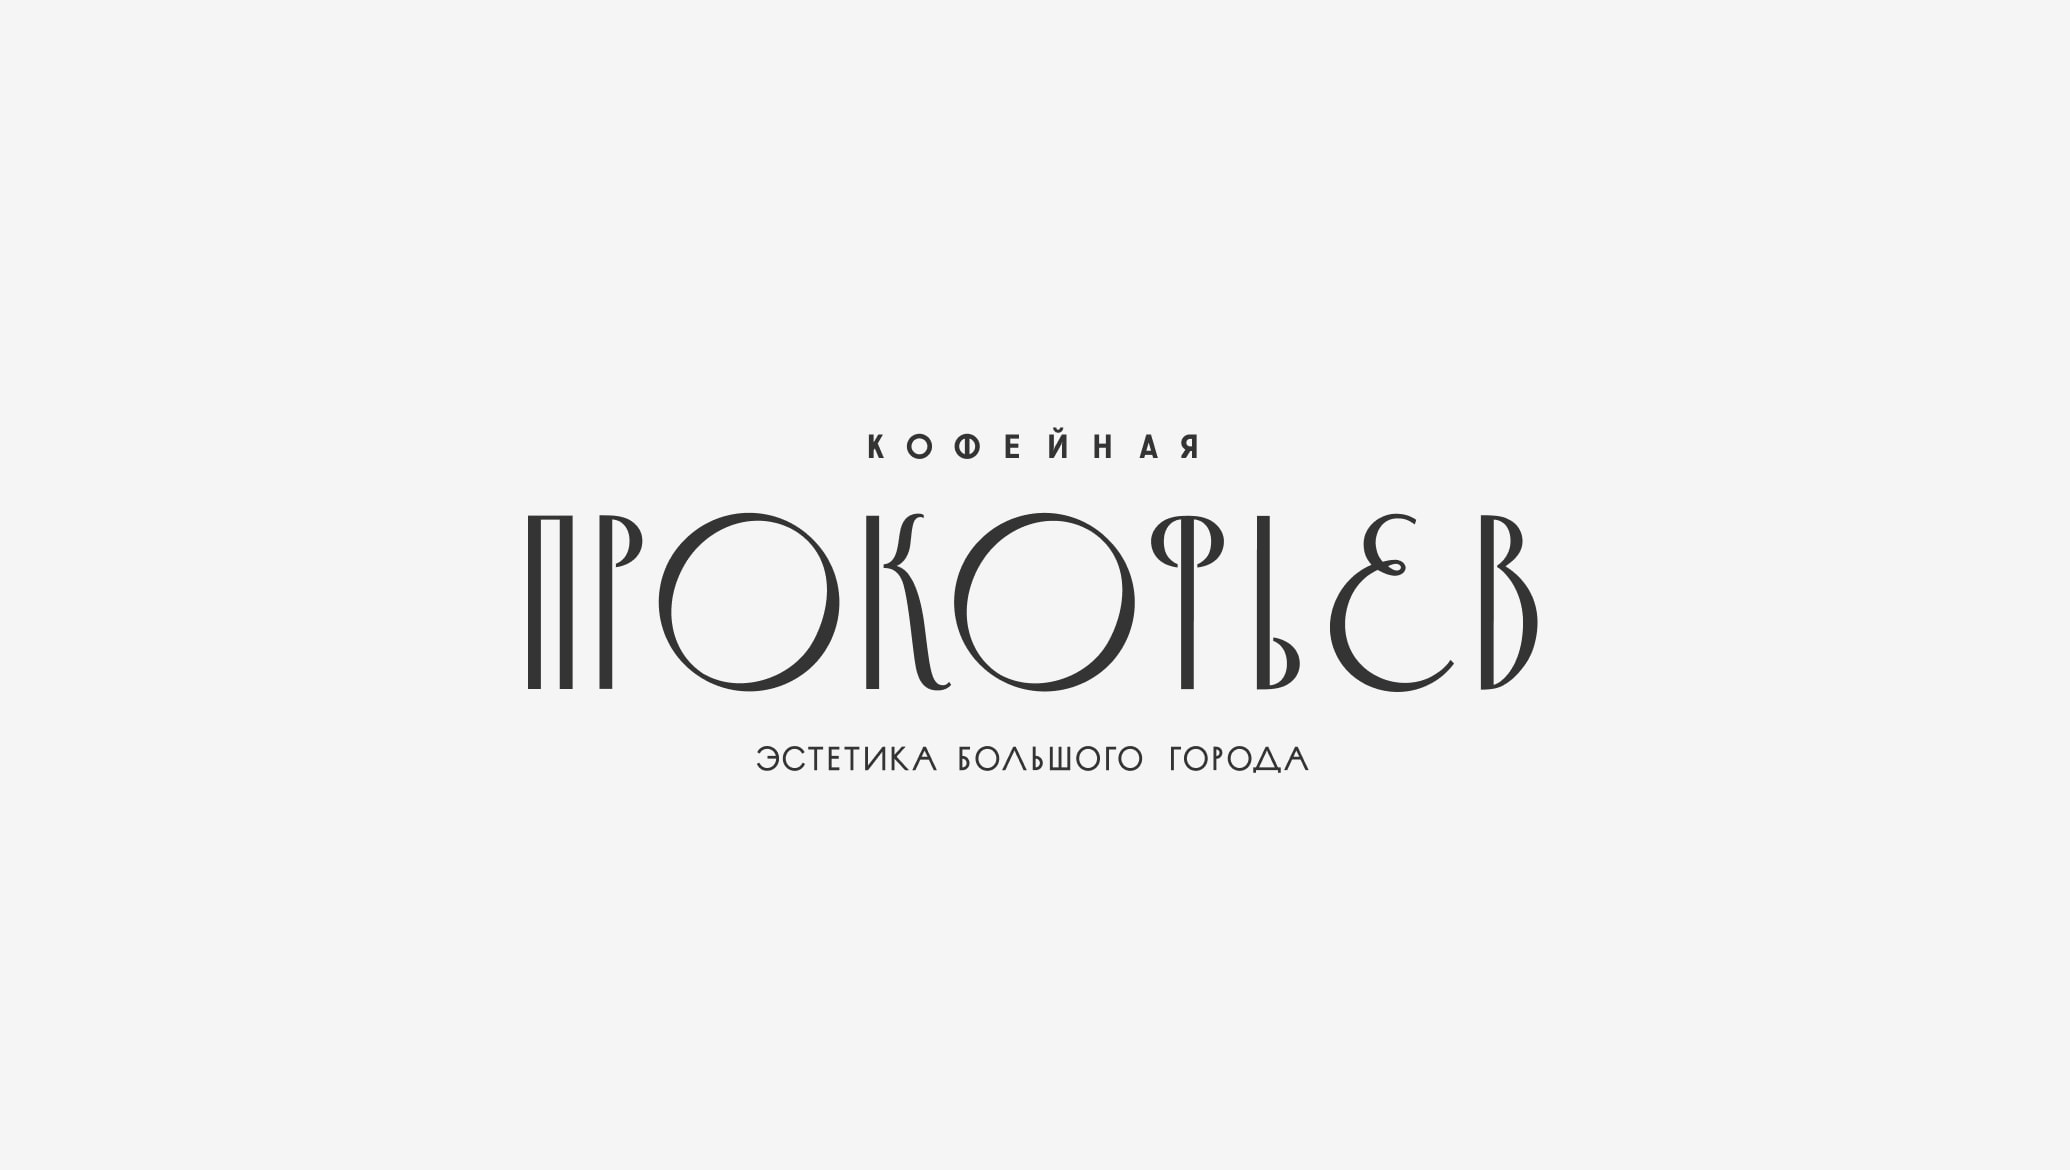 prokofiev_02-2